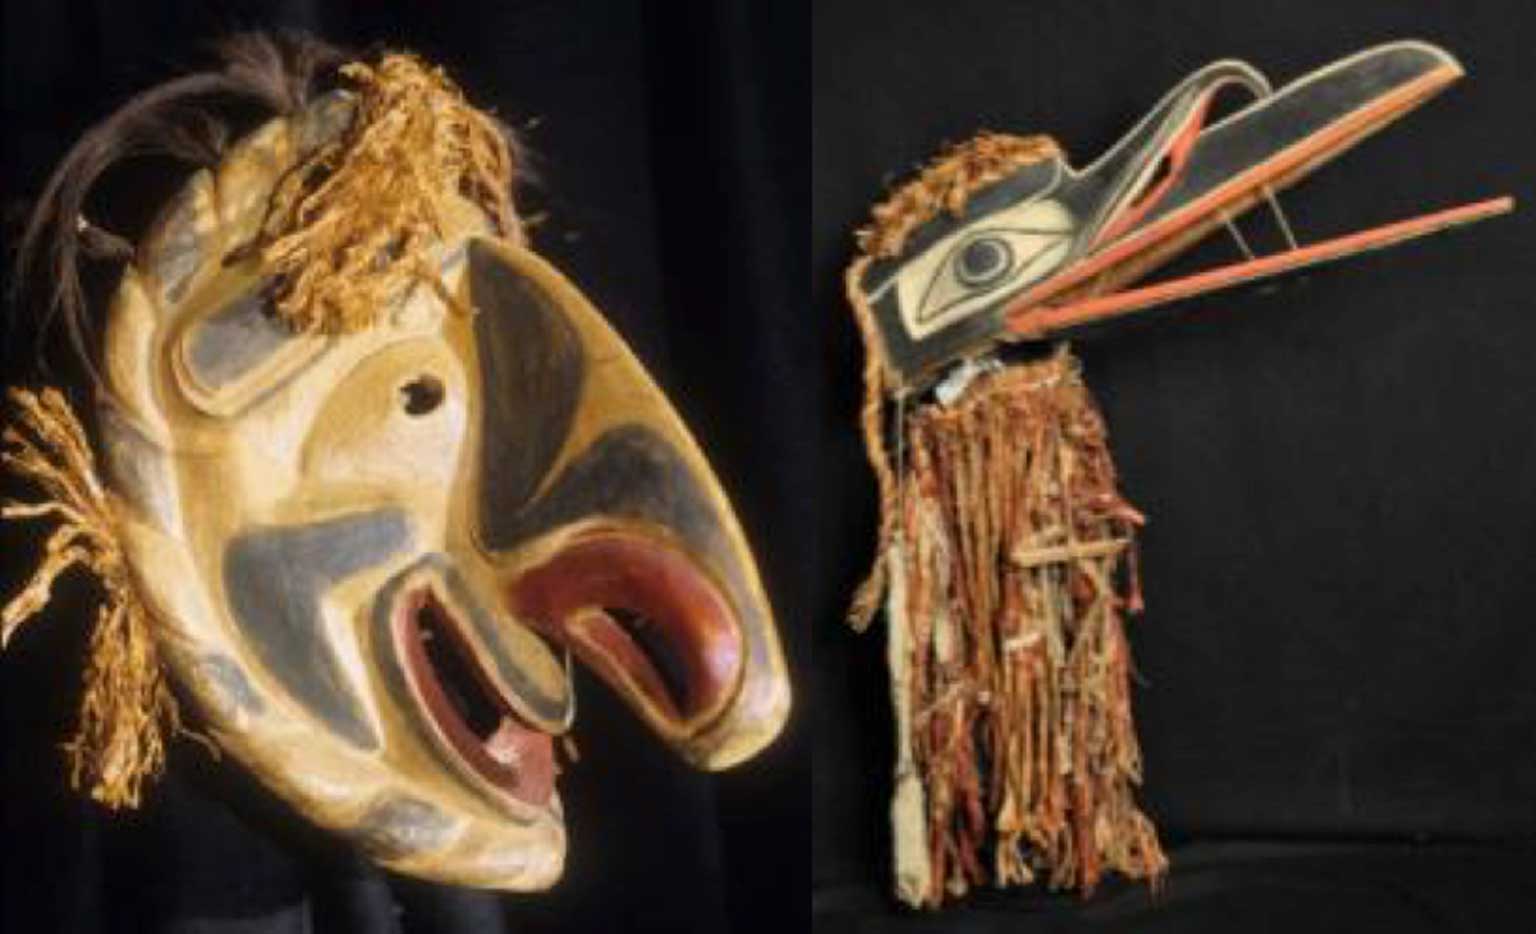 Colour photograph of Nułamał - Fool Mask against black background